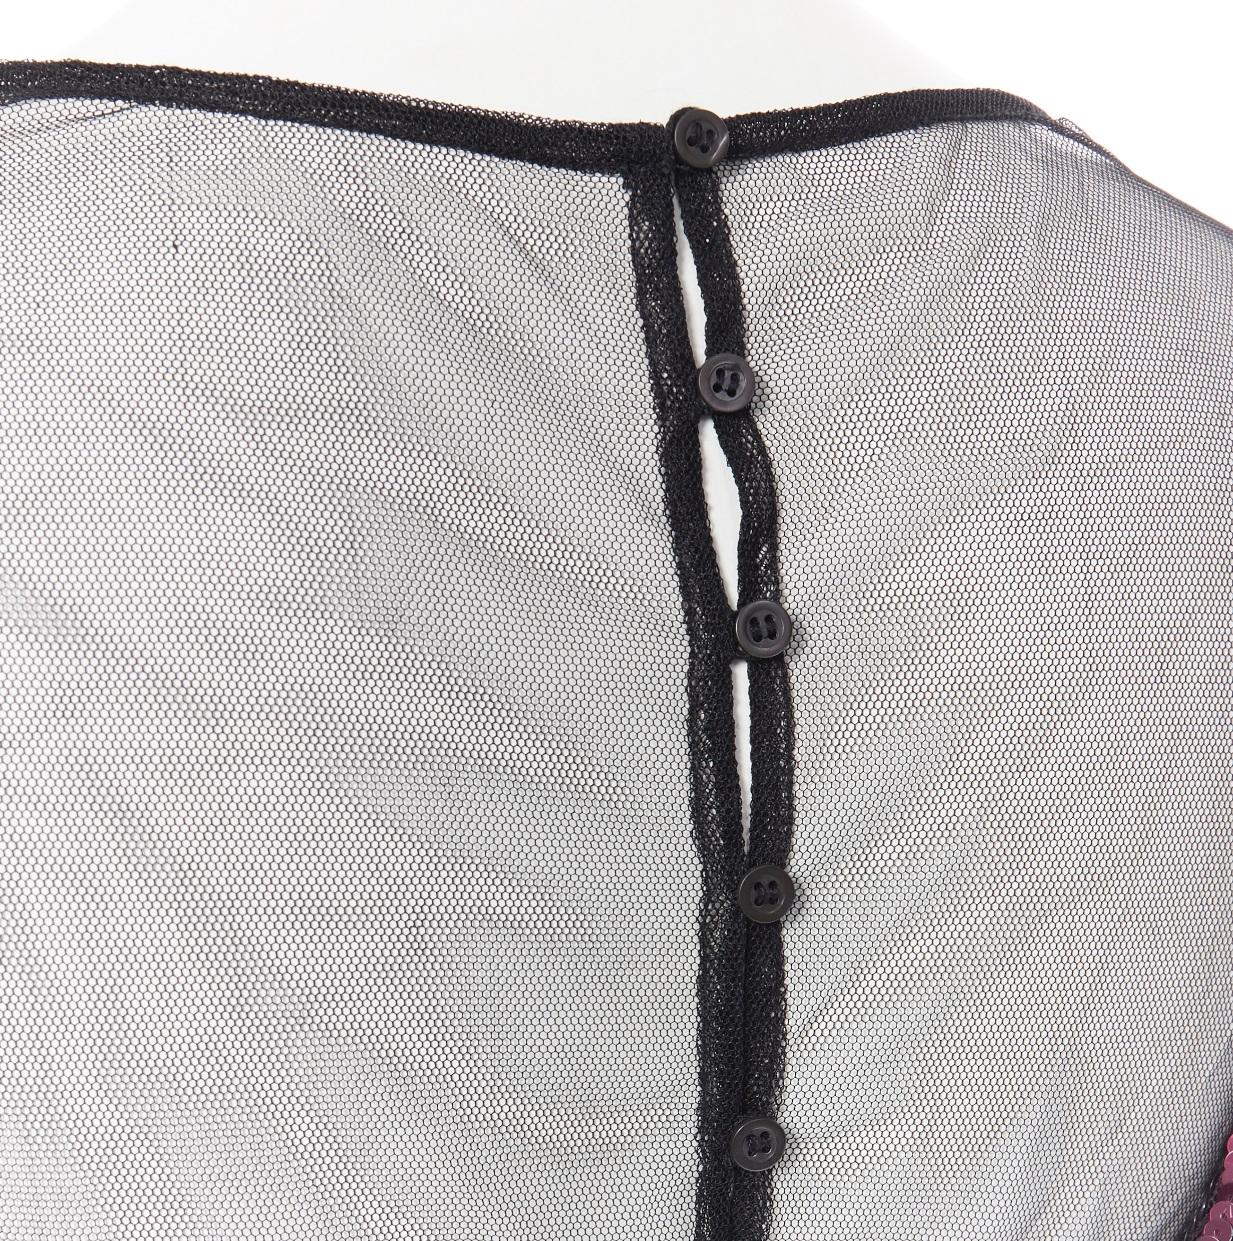 new DRIES VAN NOTEN AW17 Carti black net mesh purple sequins layered top FR40 1